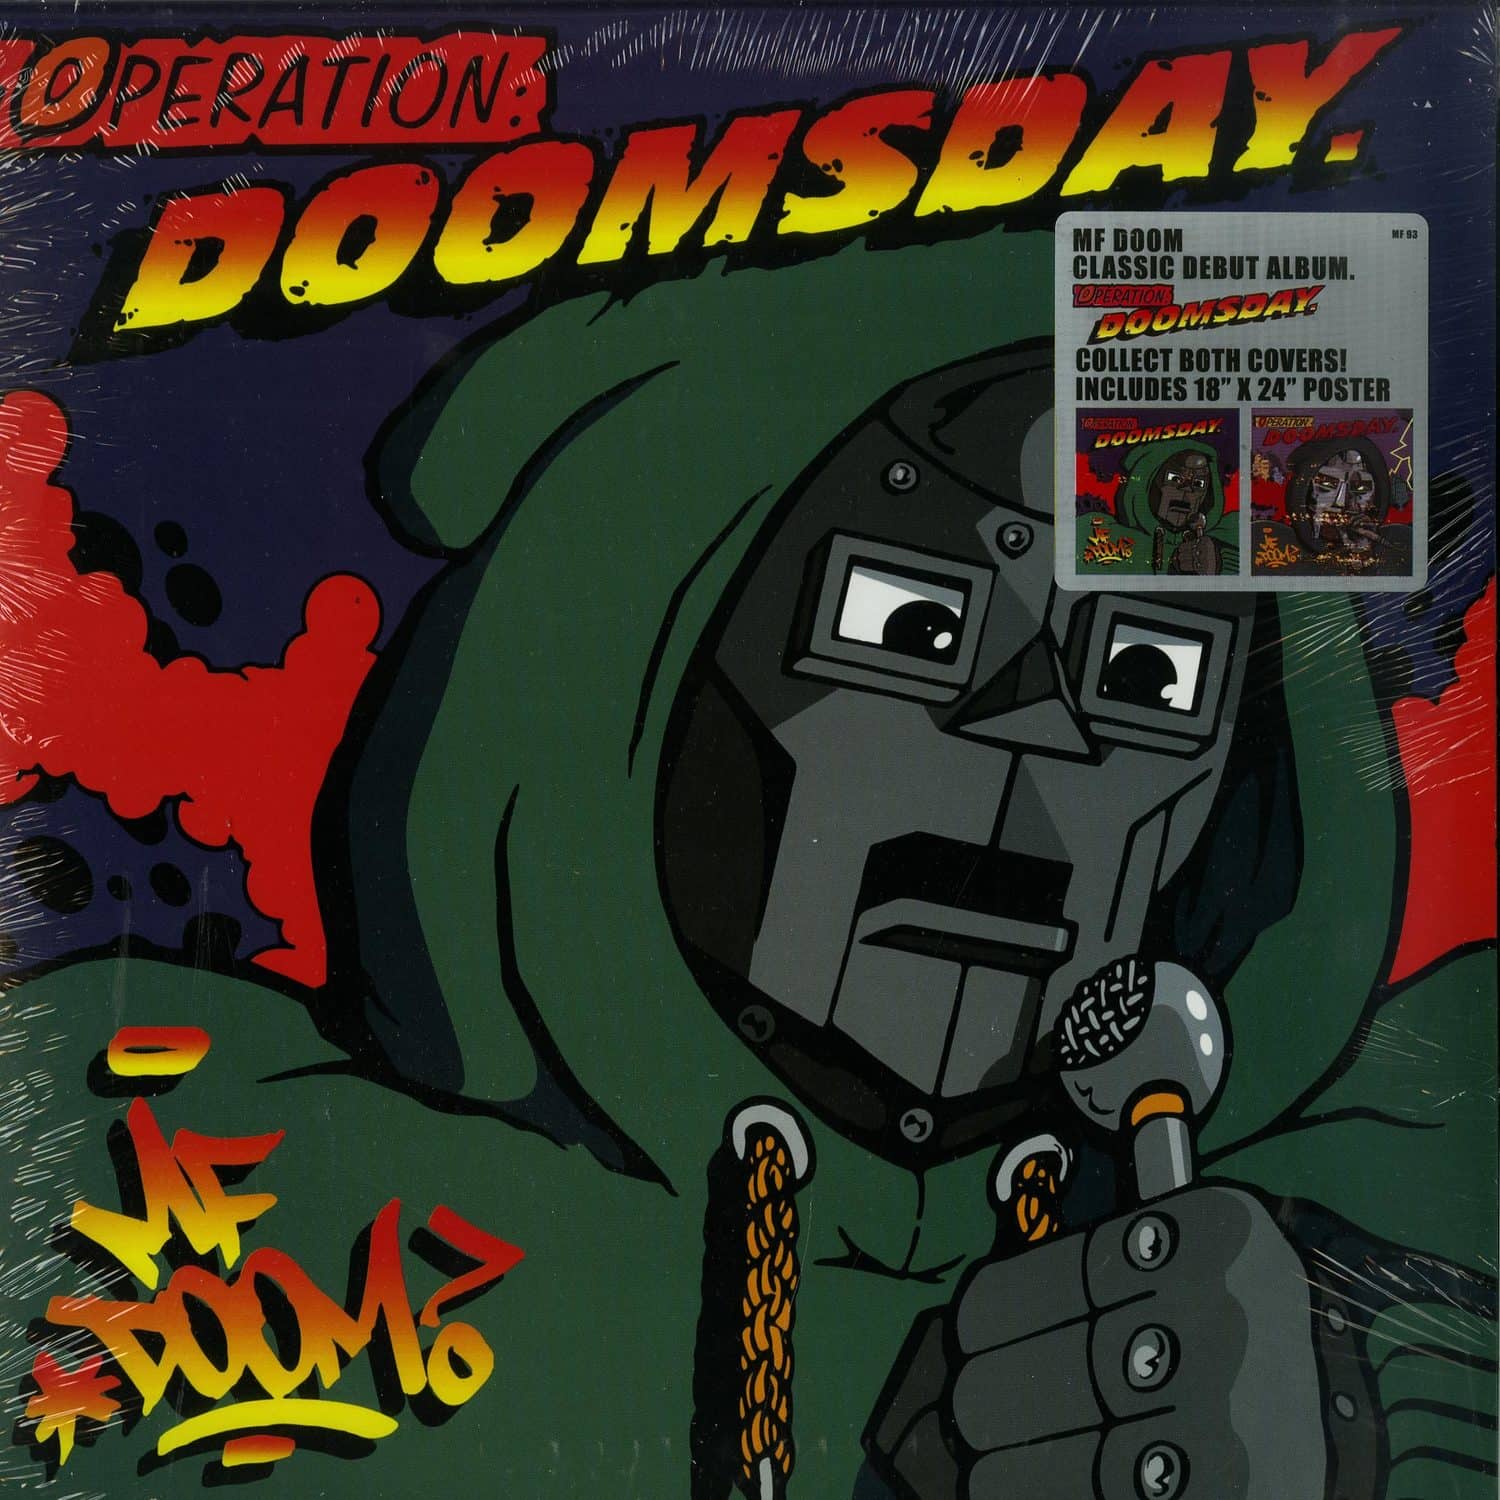 MF Doom - OPERATION: DOOMSDAY 